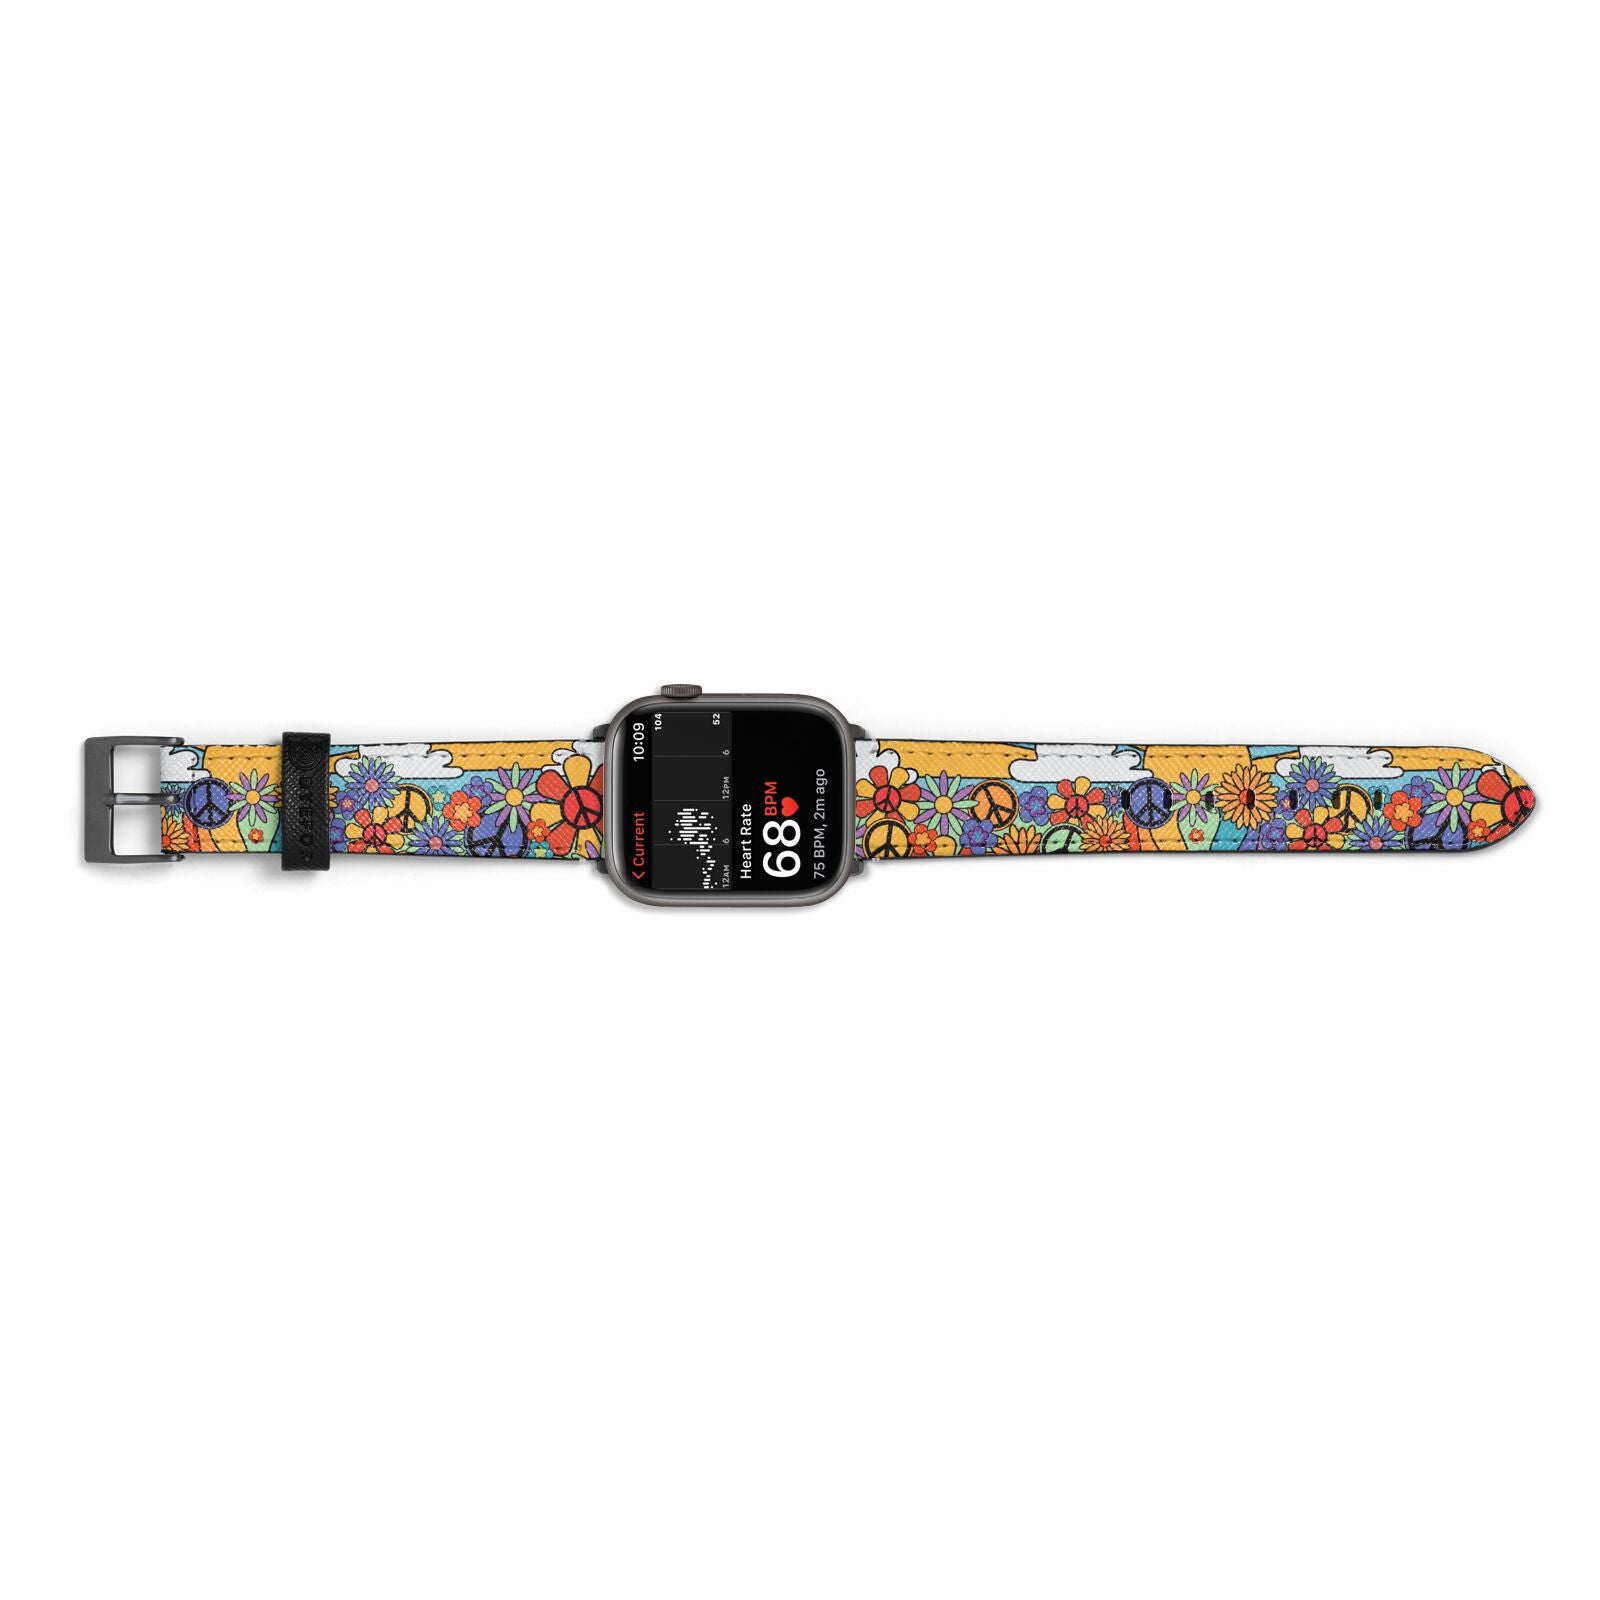 Seventies Groovy Retro Apple Watch Strap Size 38mm Landscape Image Space Grey Hardware